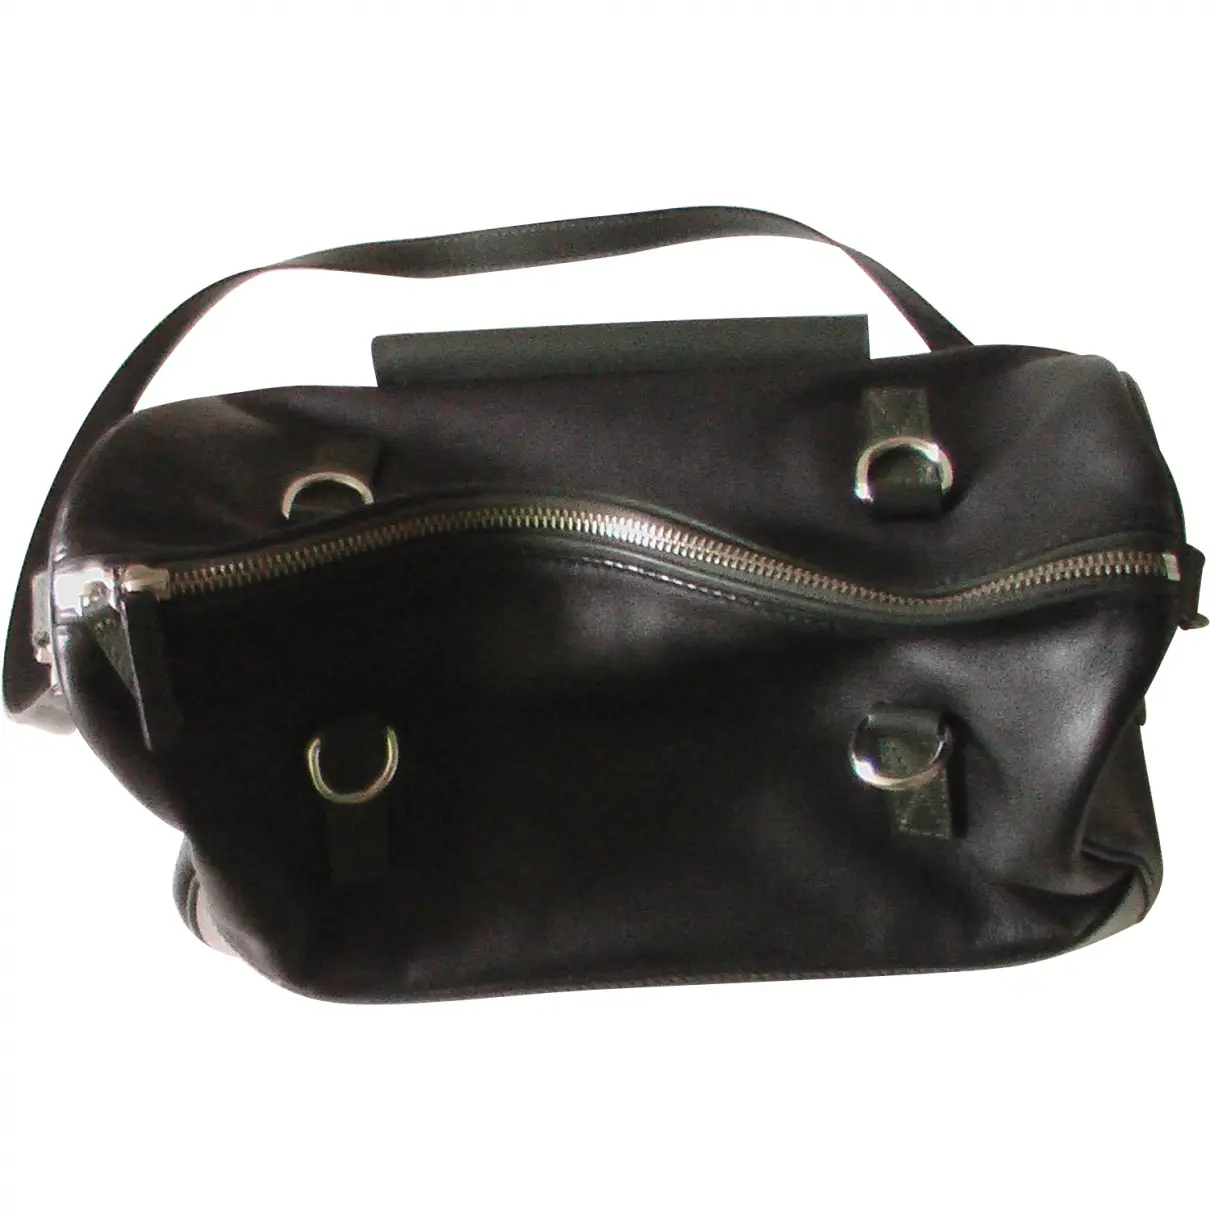 Buy Kenzo Black Leather Handbag online